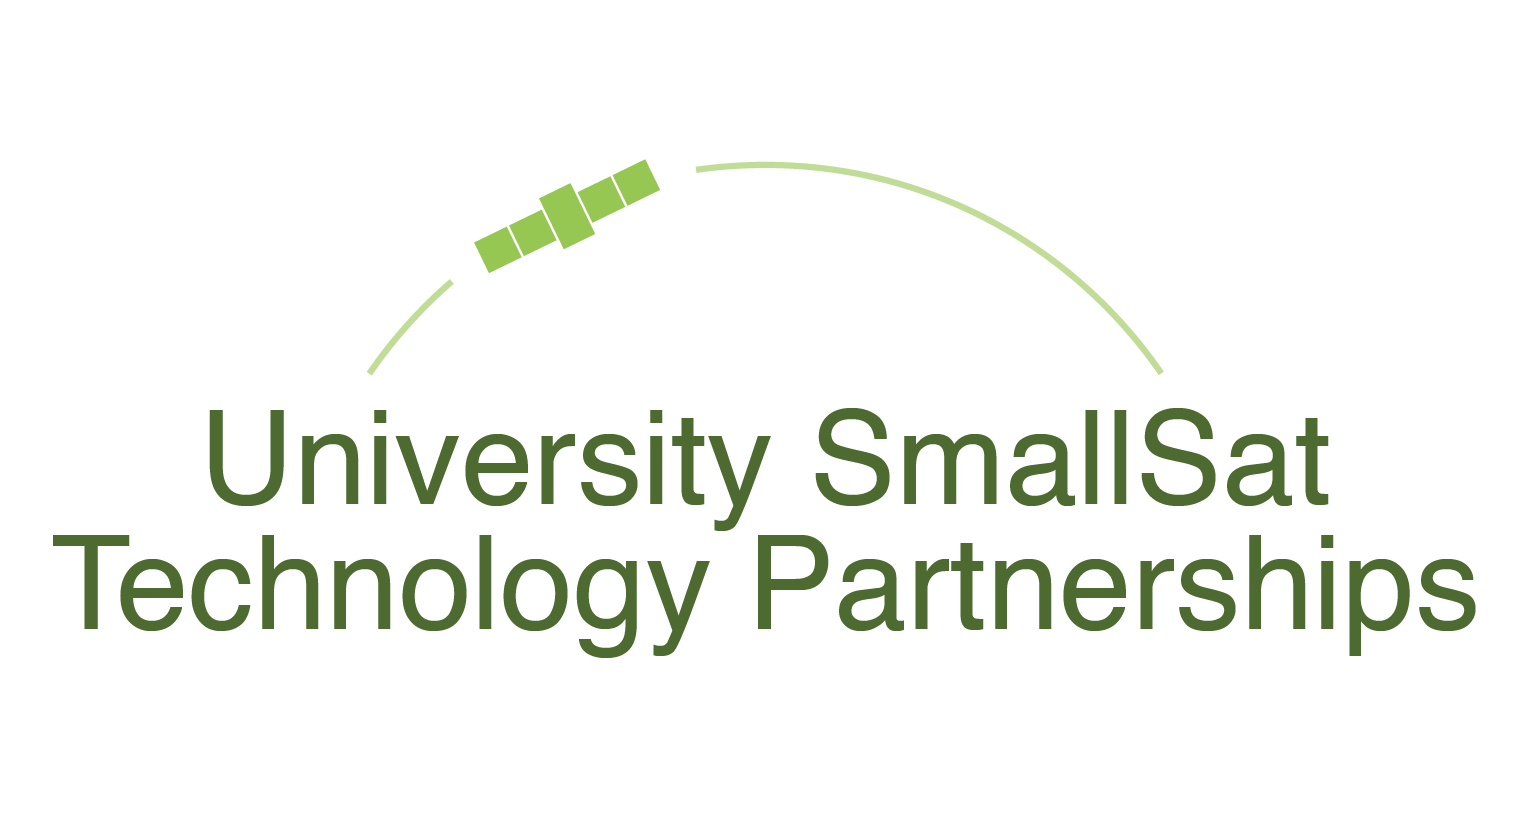 University SmallSat Technology Partnerships